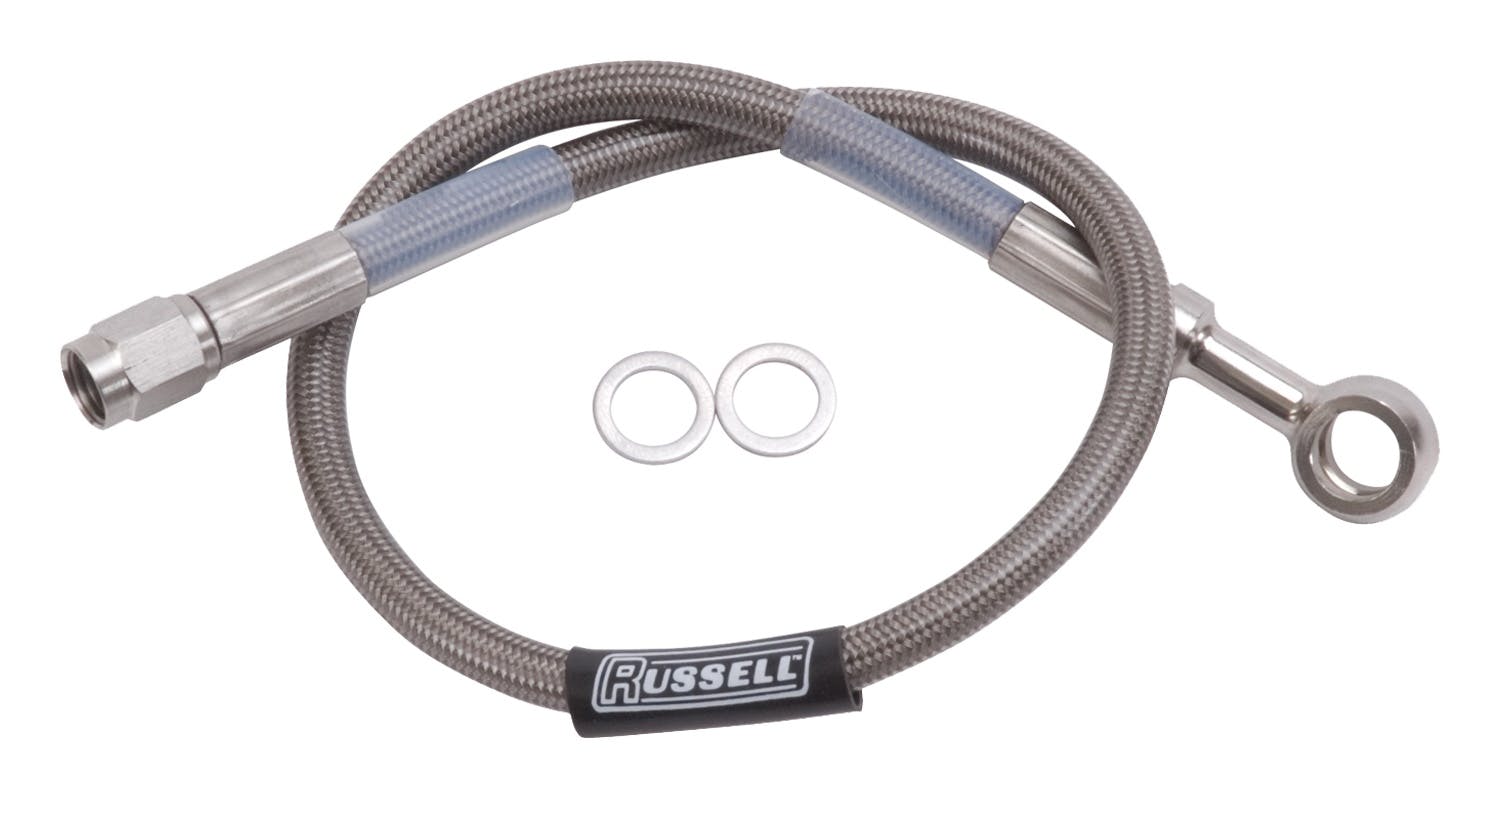 Russell 657062 Brake Line Assembly  24in Straight # 3 X 10mm Banjo   Endura / Street Legal